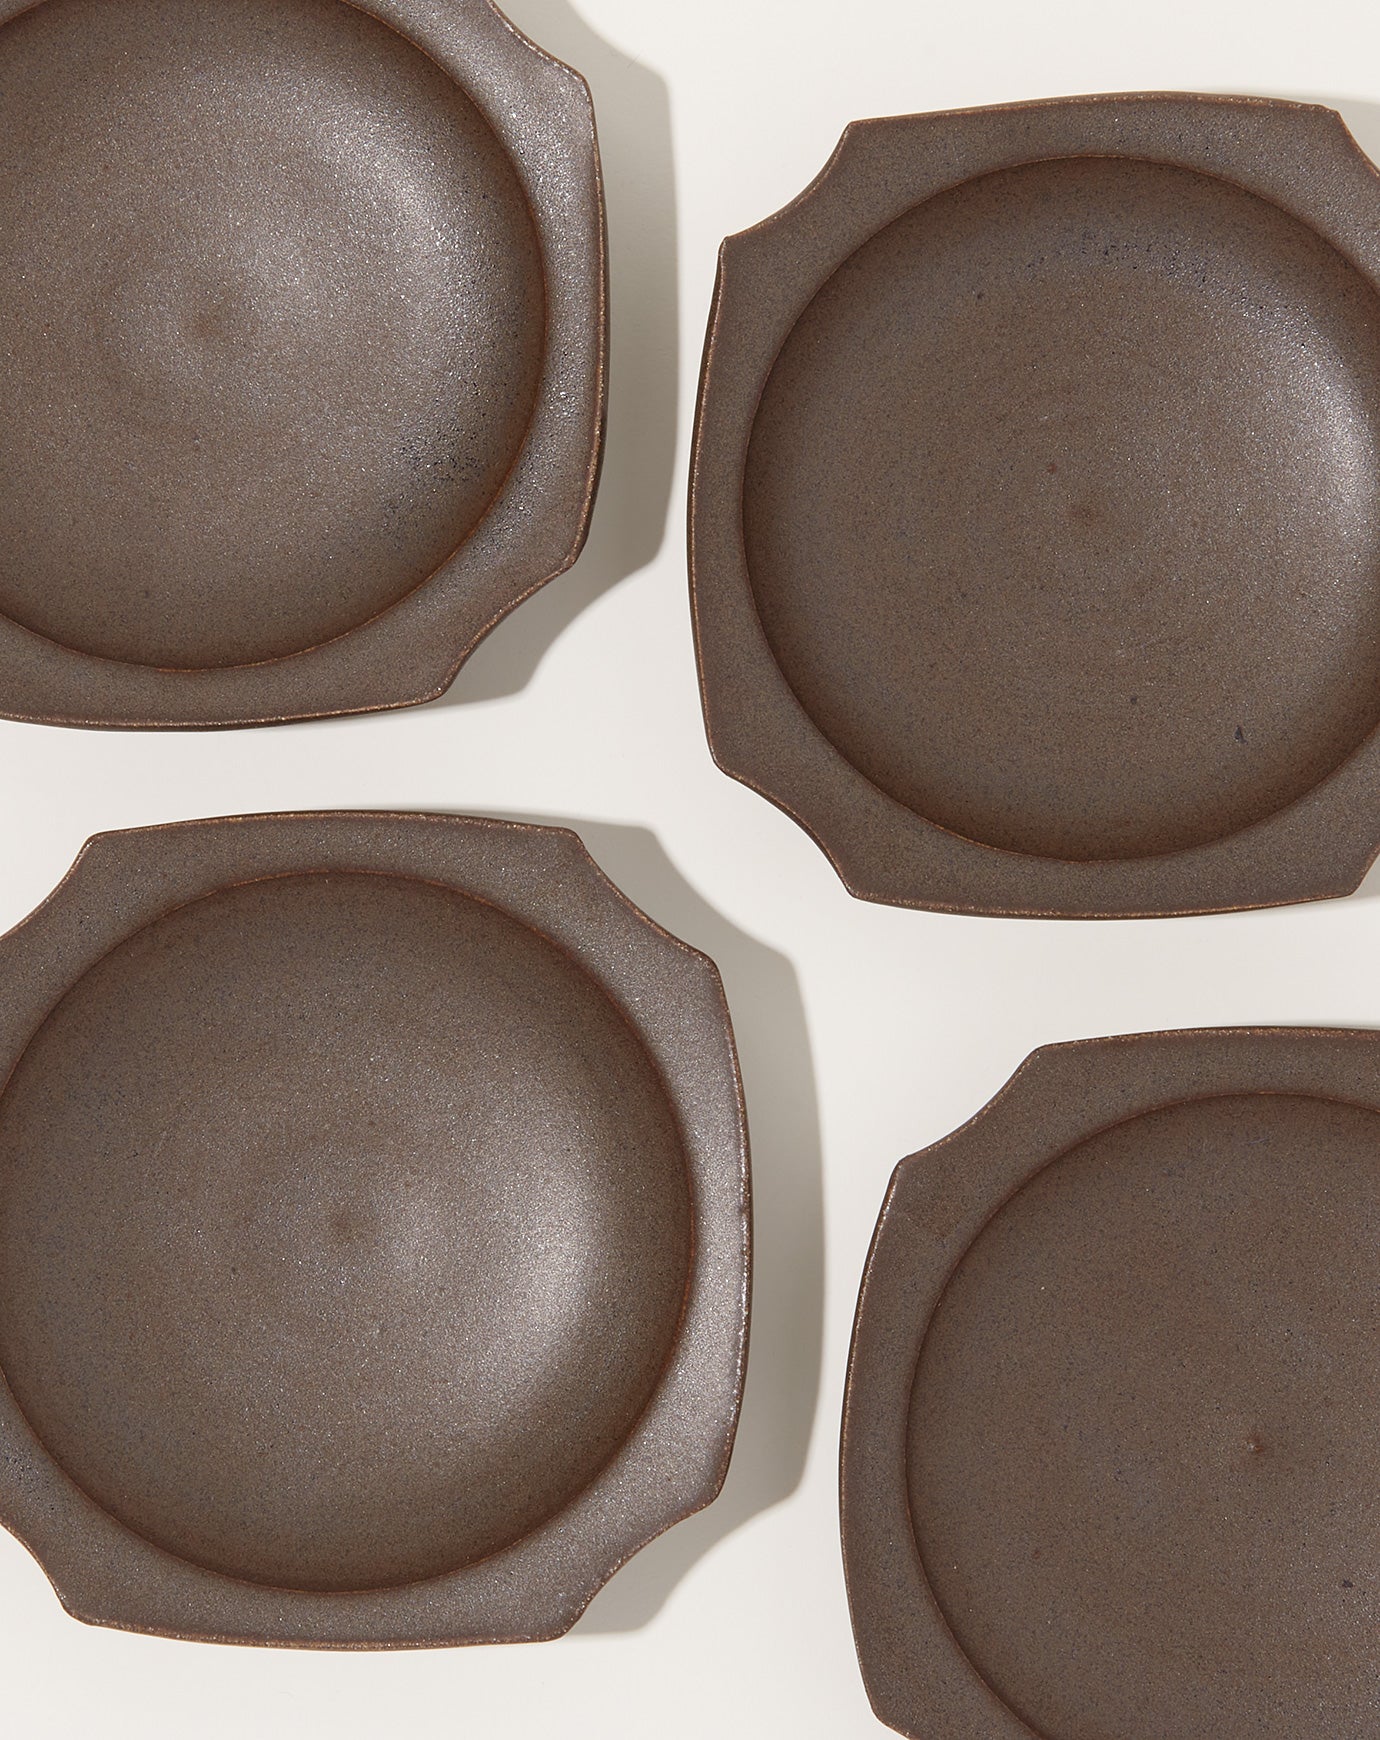 Monohanako Cut Plate in Chocolate